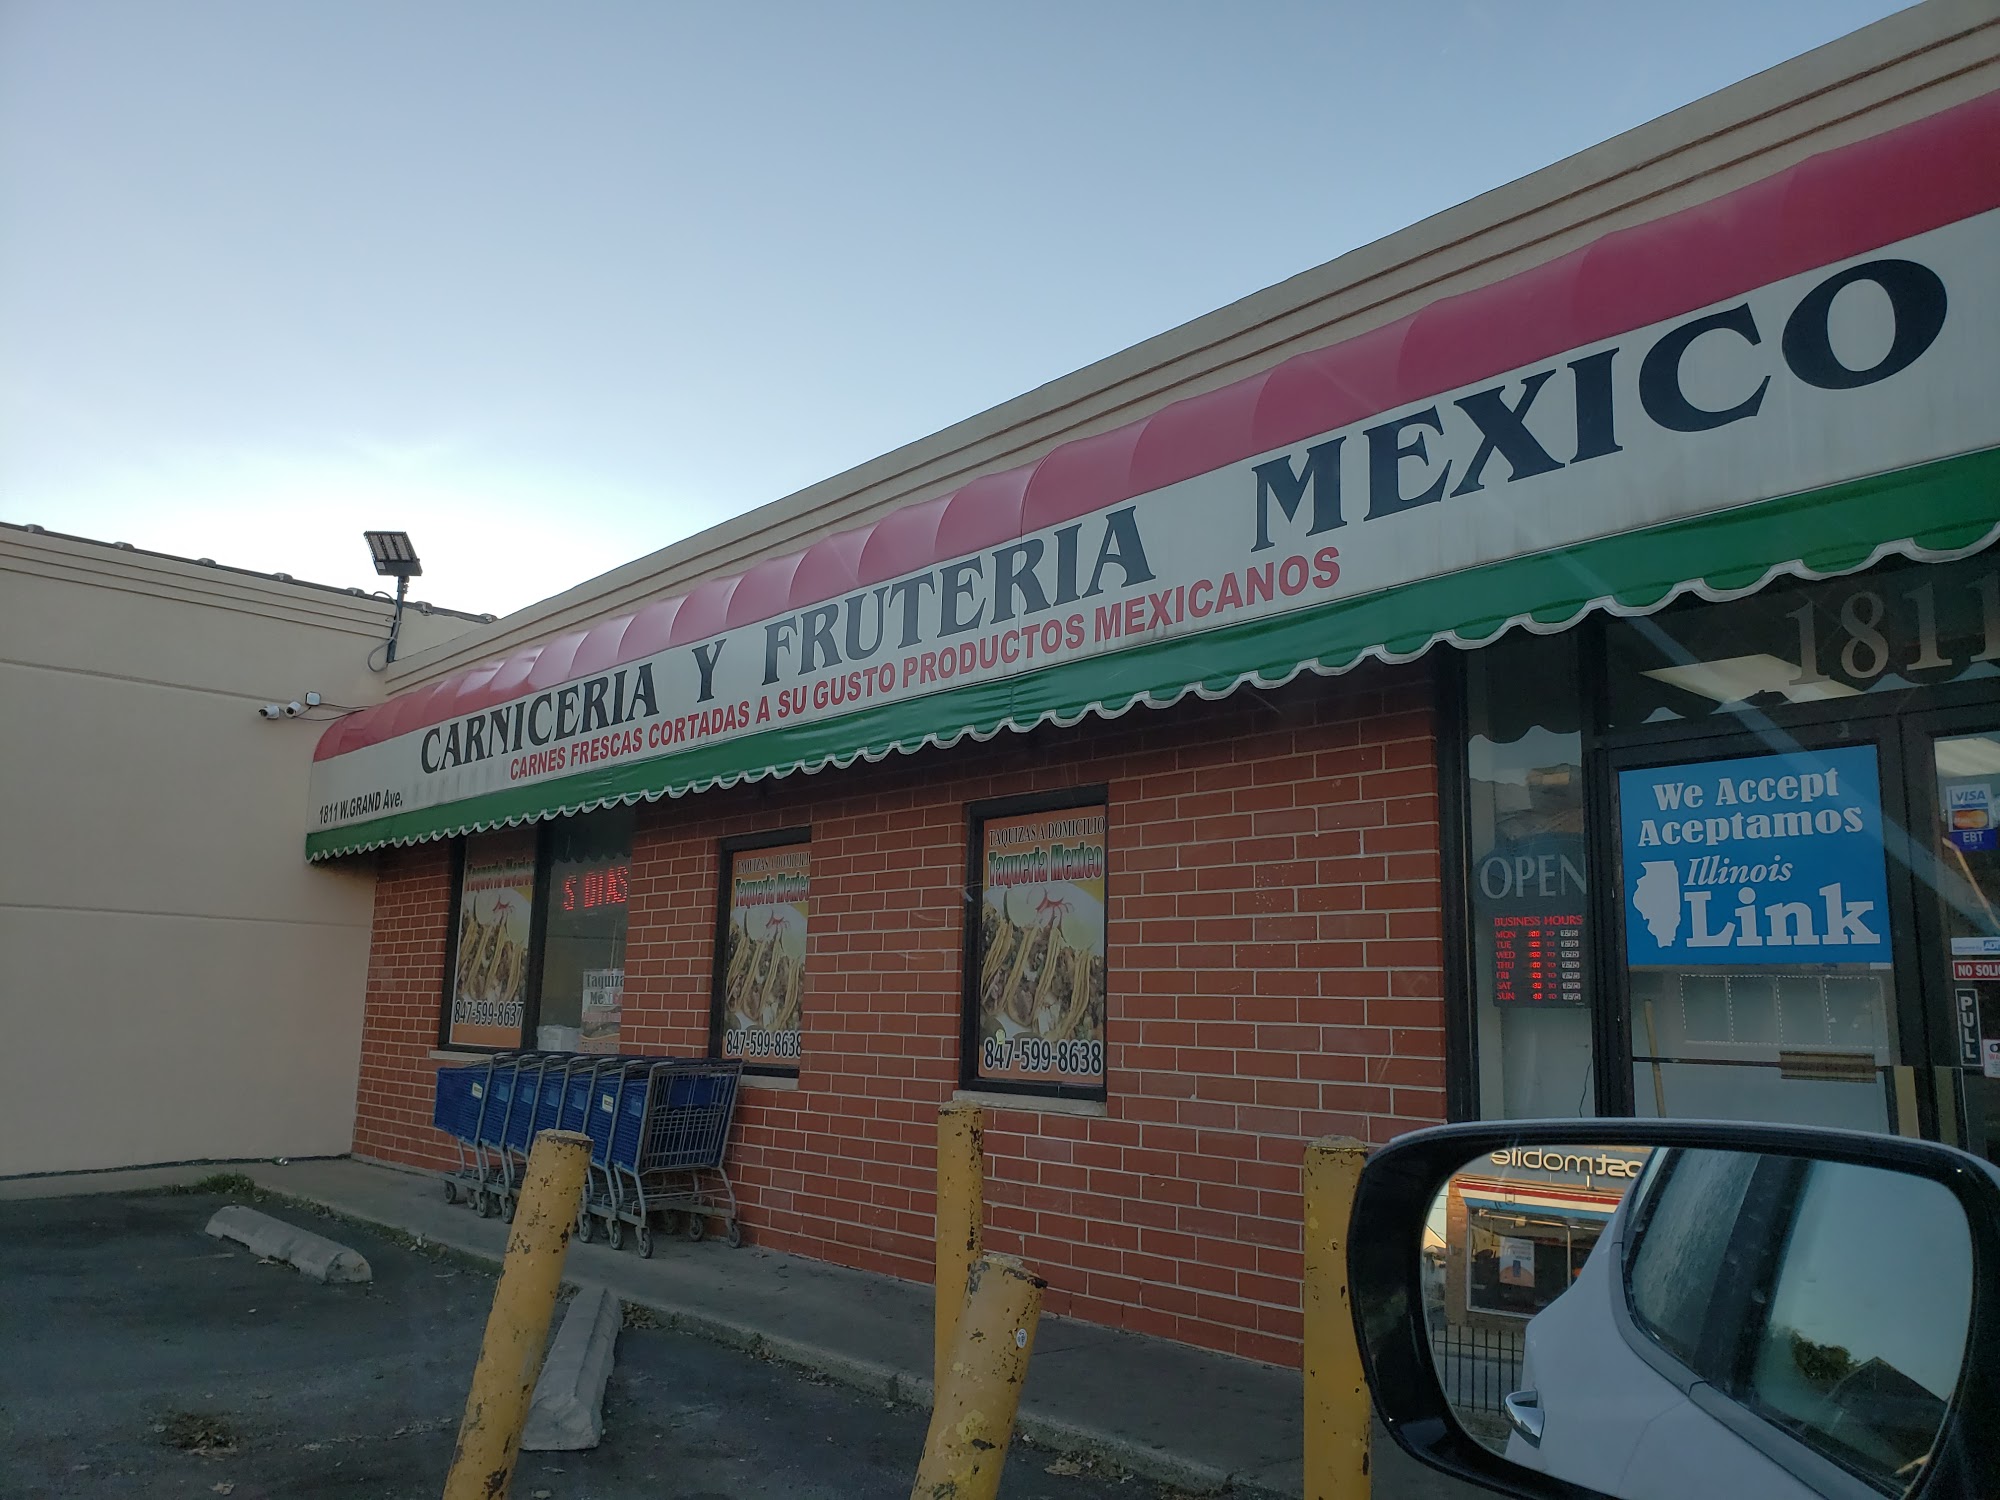 Carniceria Mexico